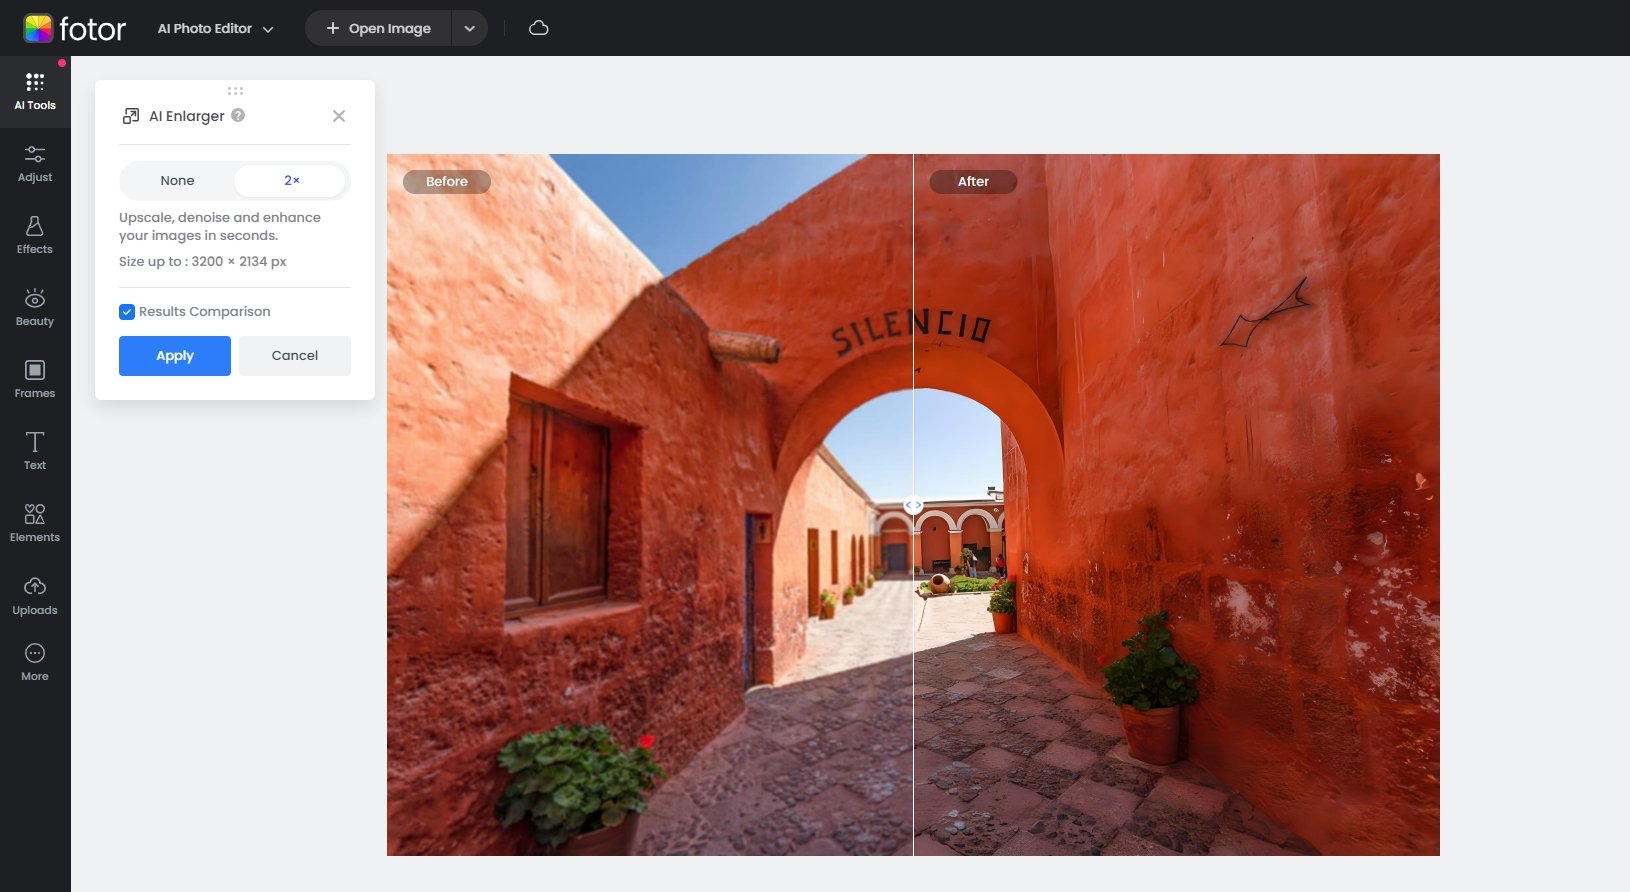 image upscaler enhances the resolution of building photos